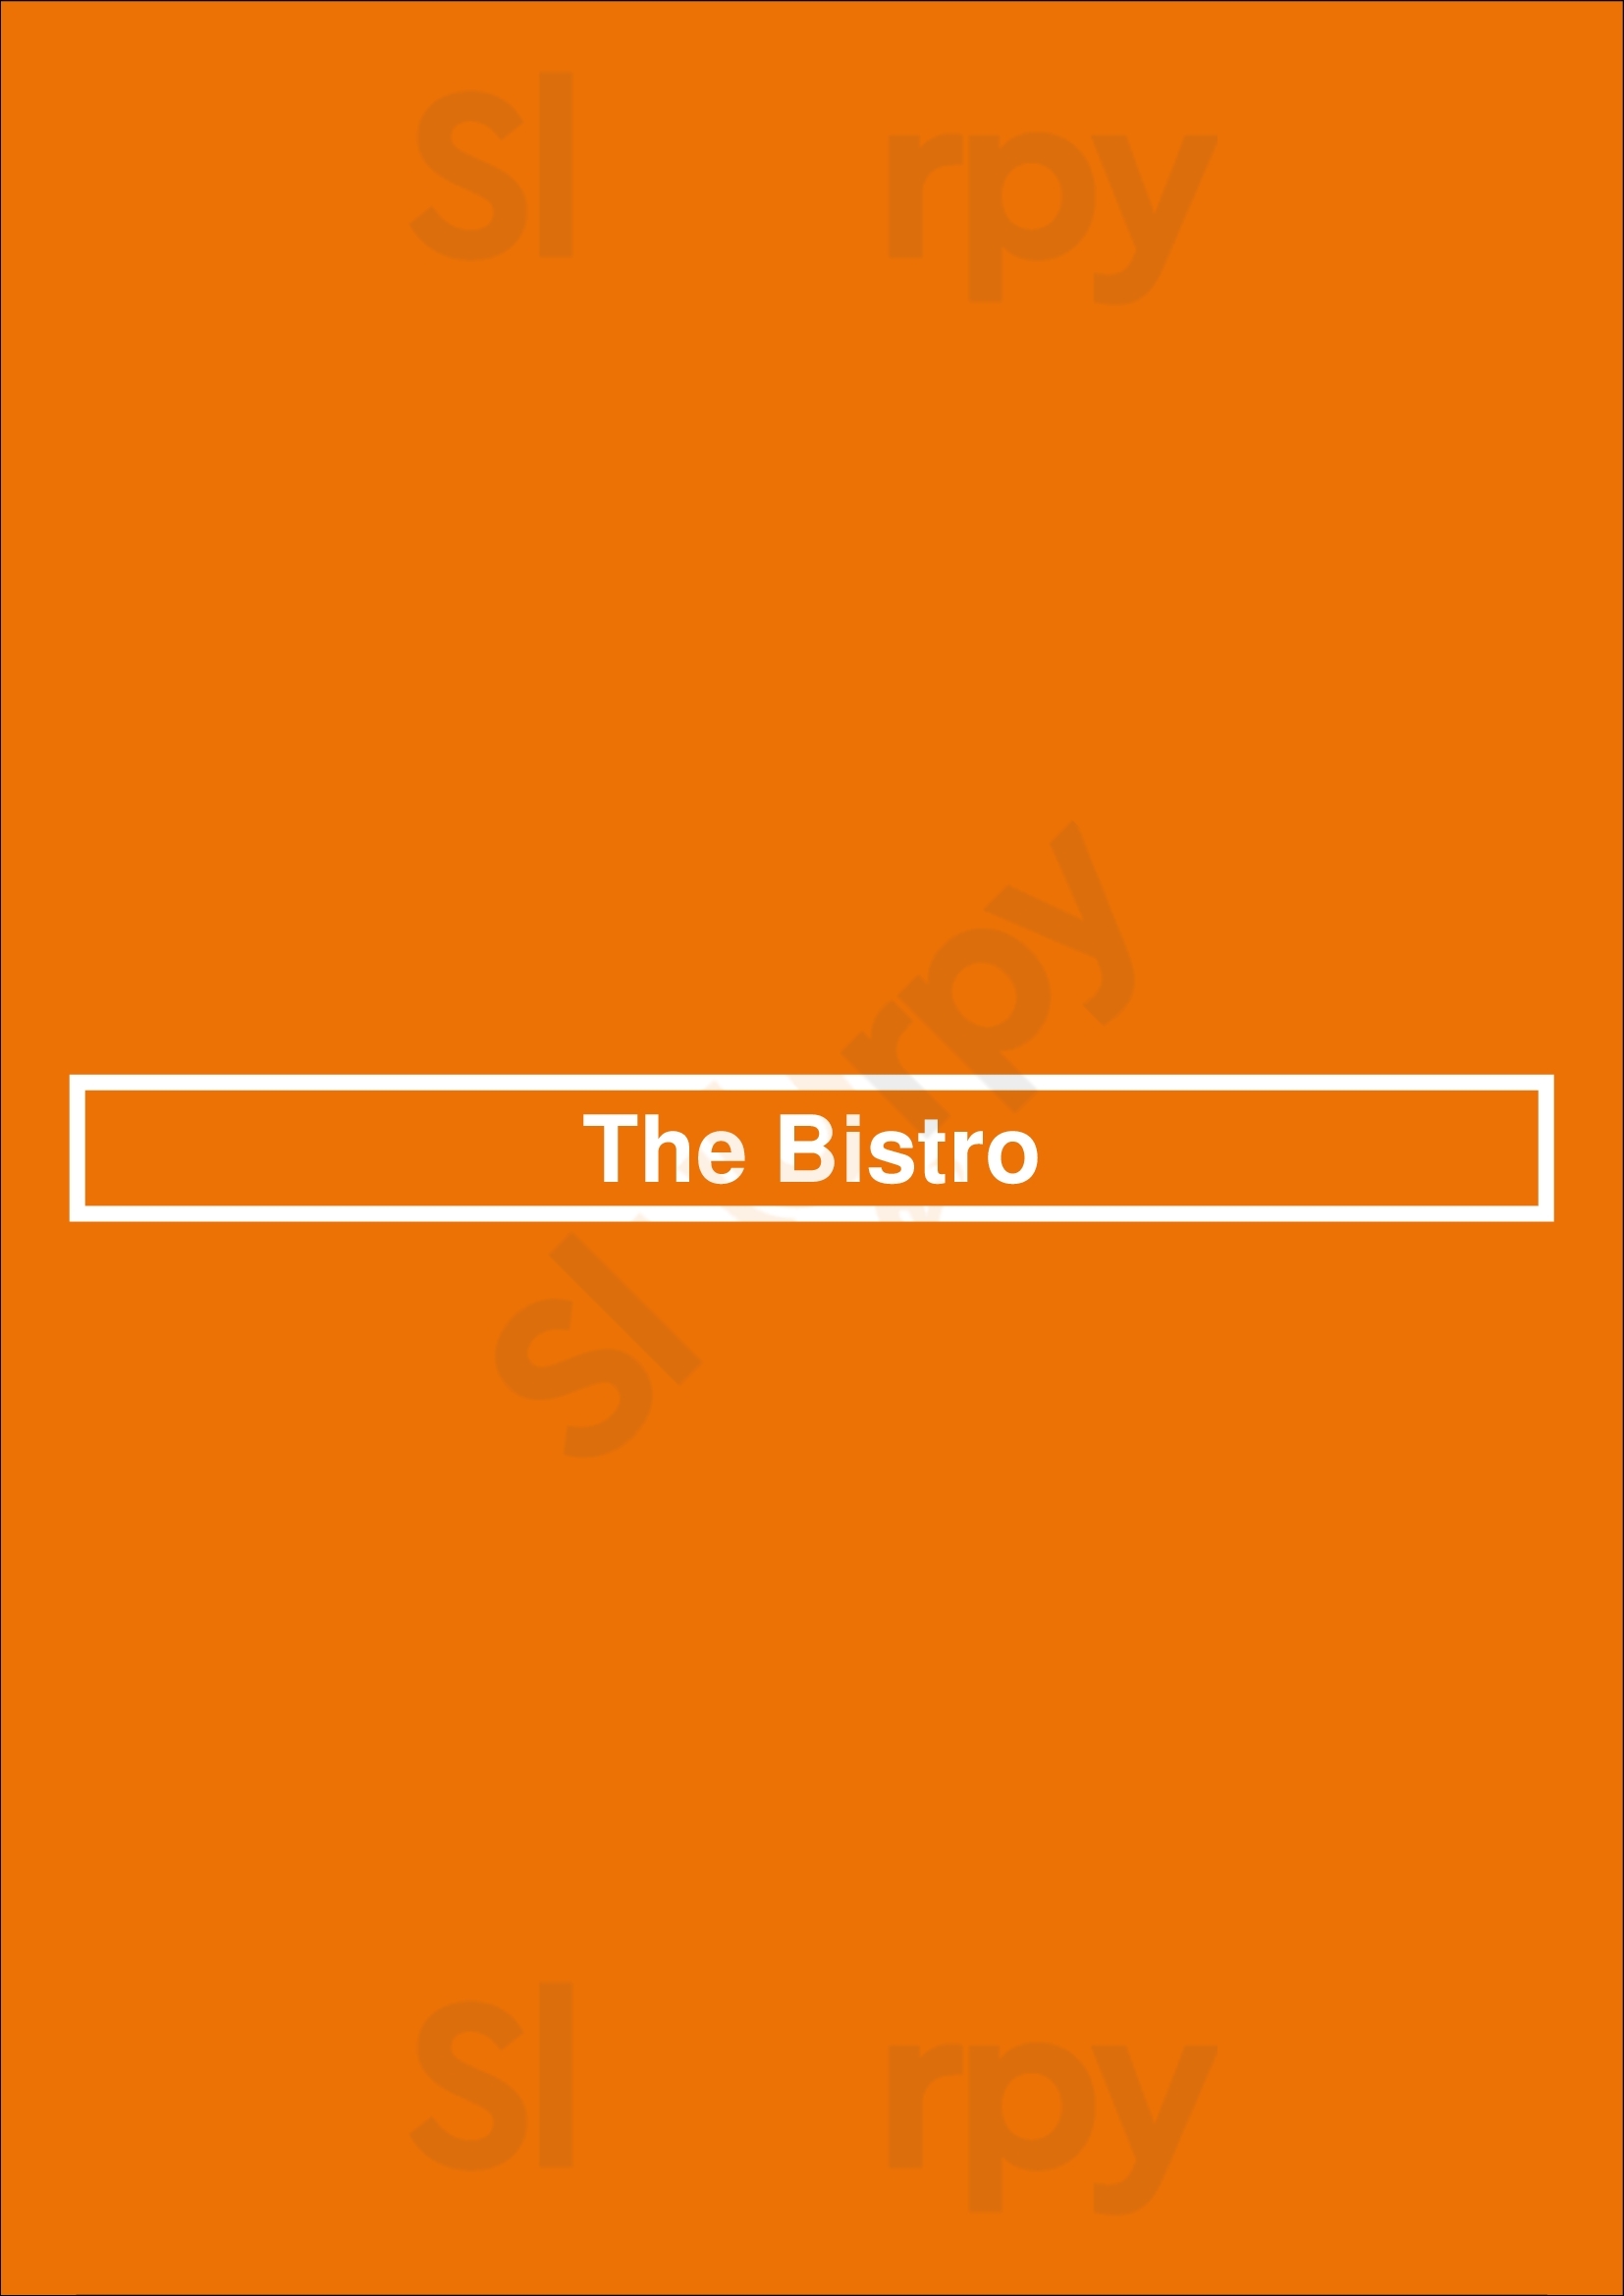 The Bistro Praha Menu - 1